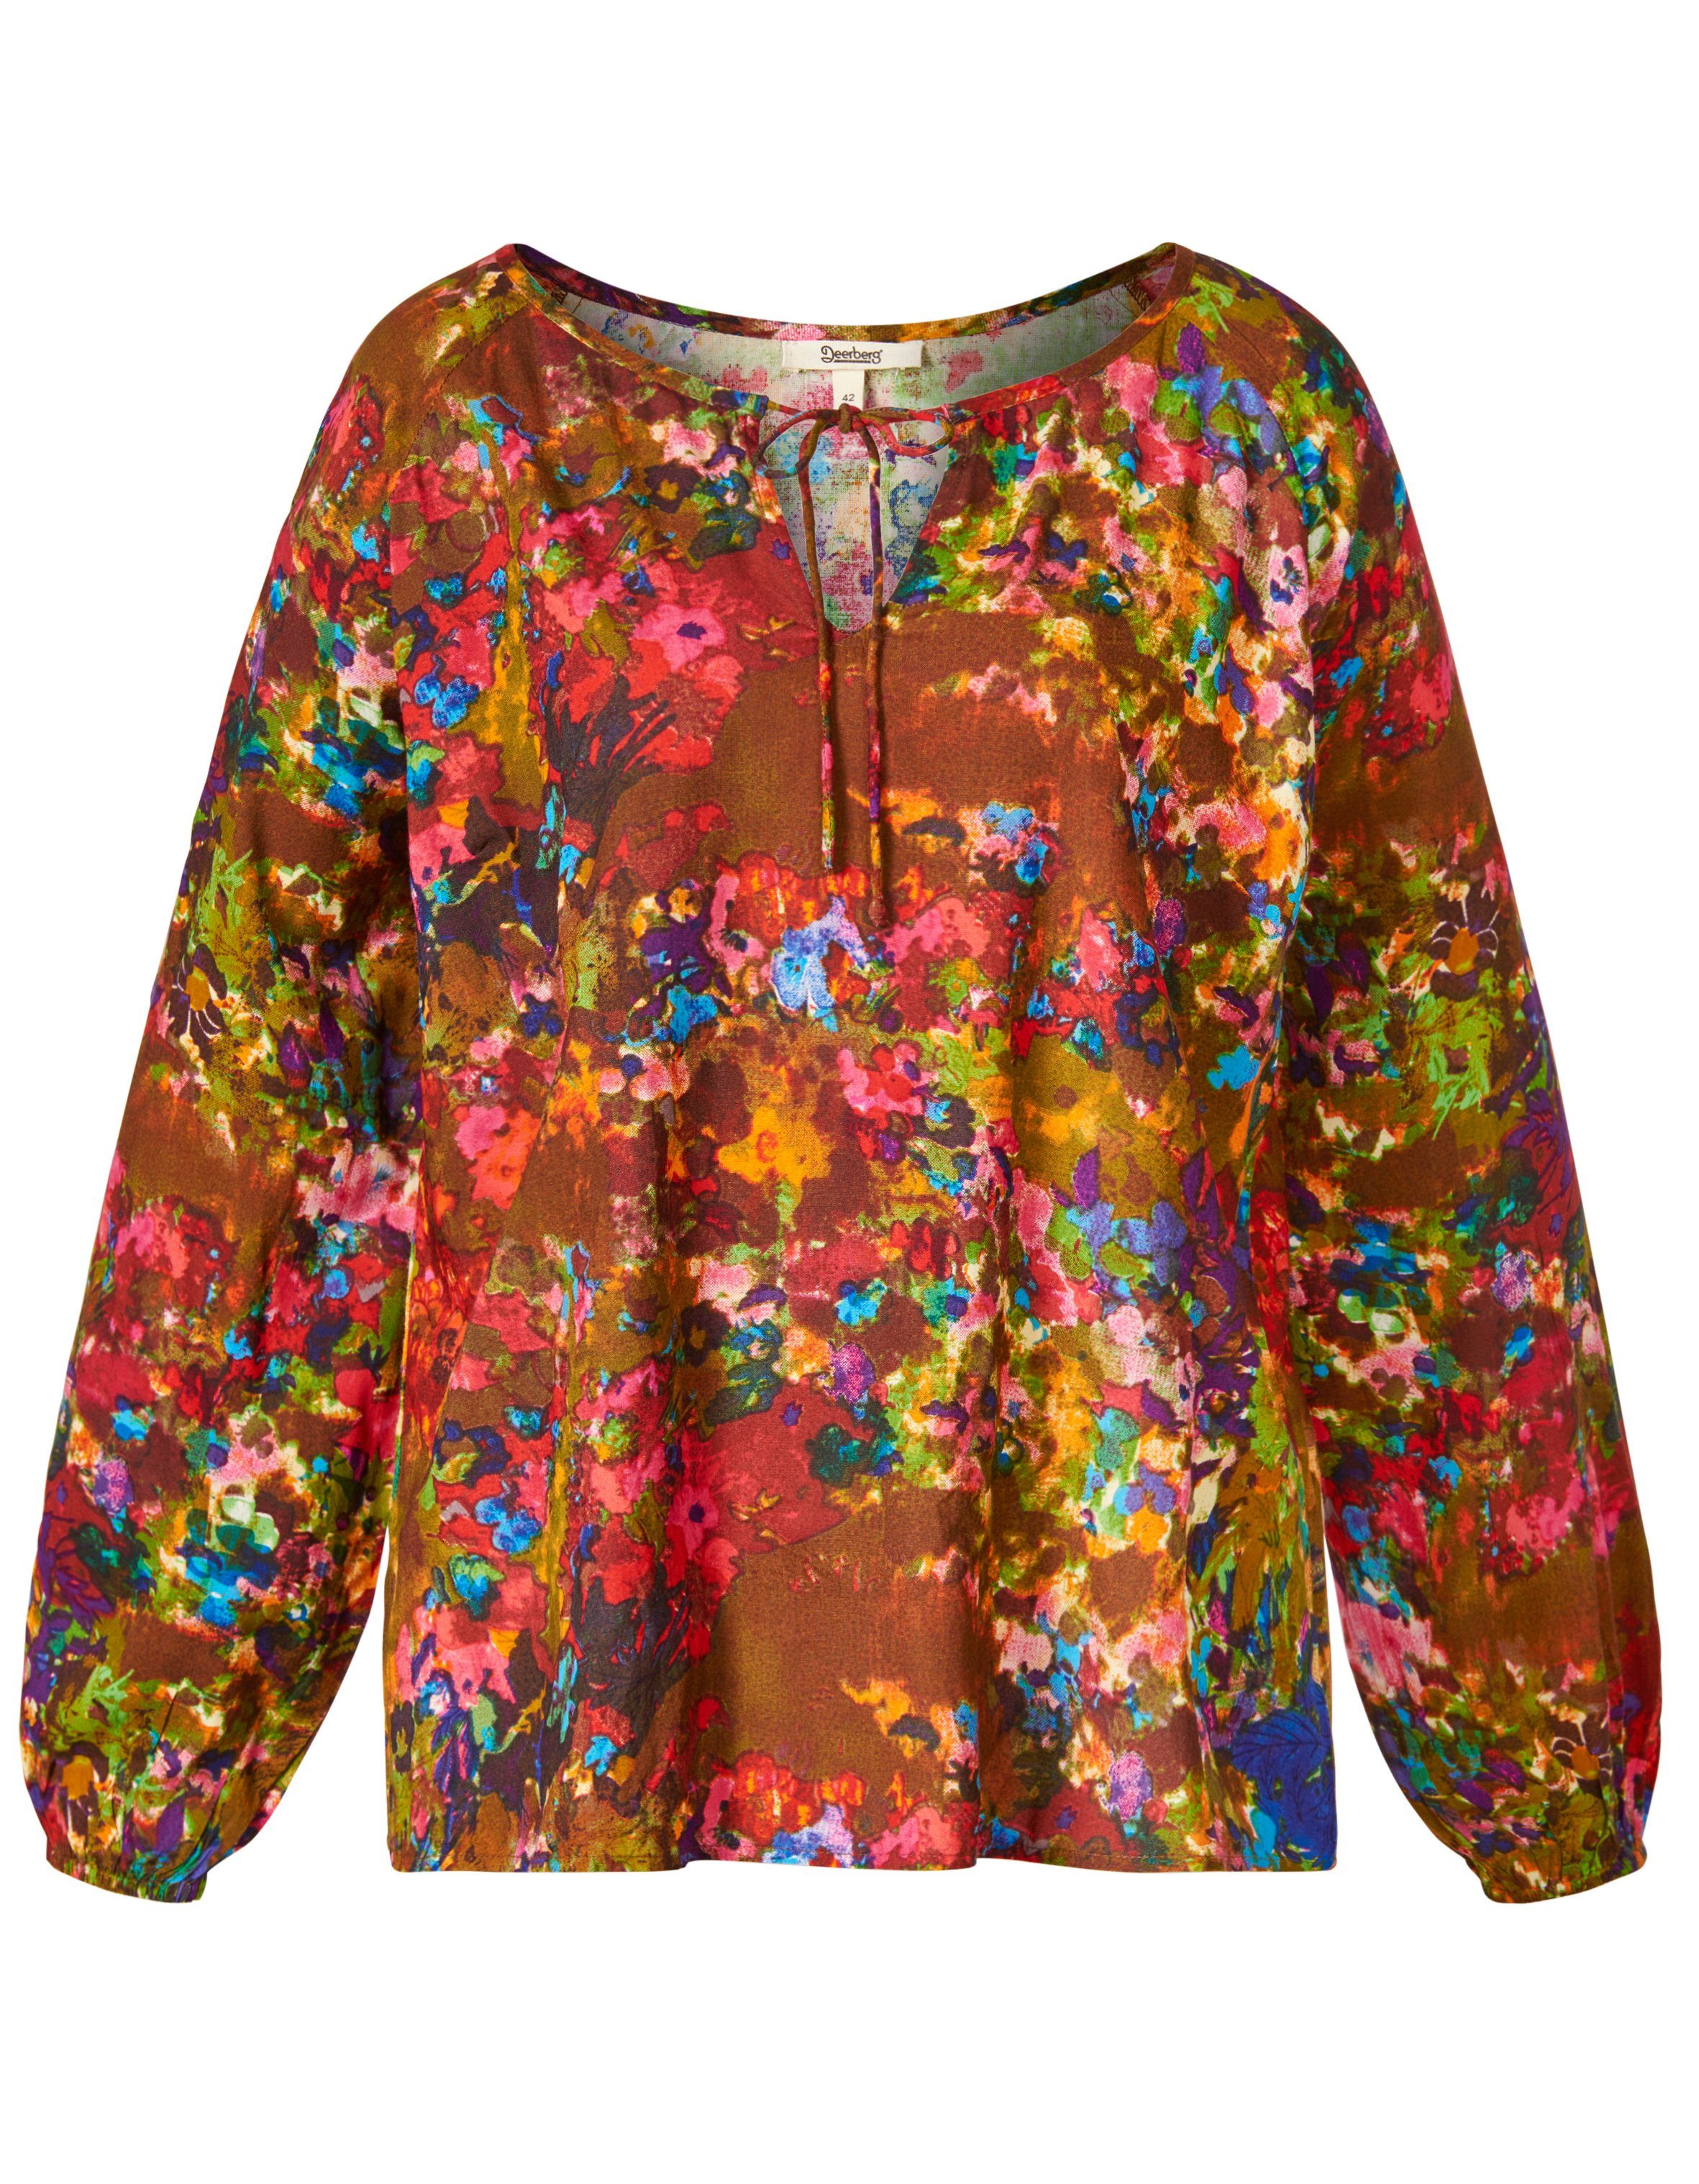 Deerberg Langarmbluse Aquarell Bluse braun multicolor aquarell, bedruckt, geblümt, bunt